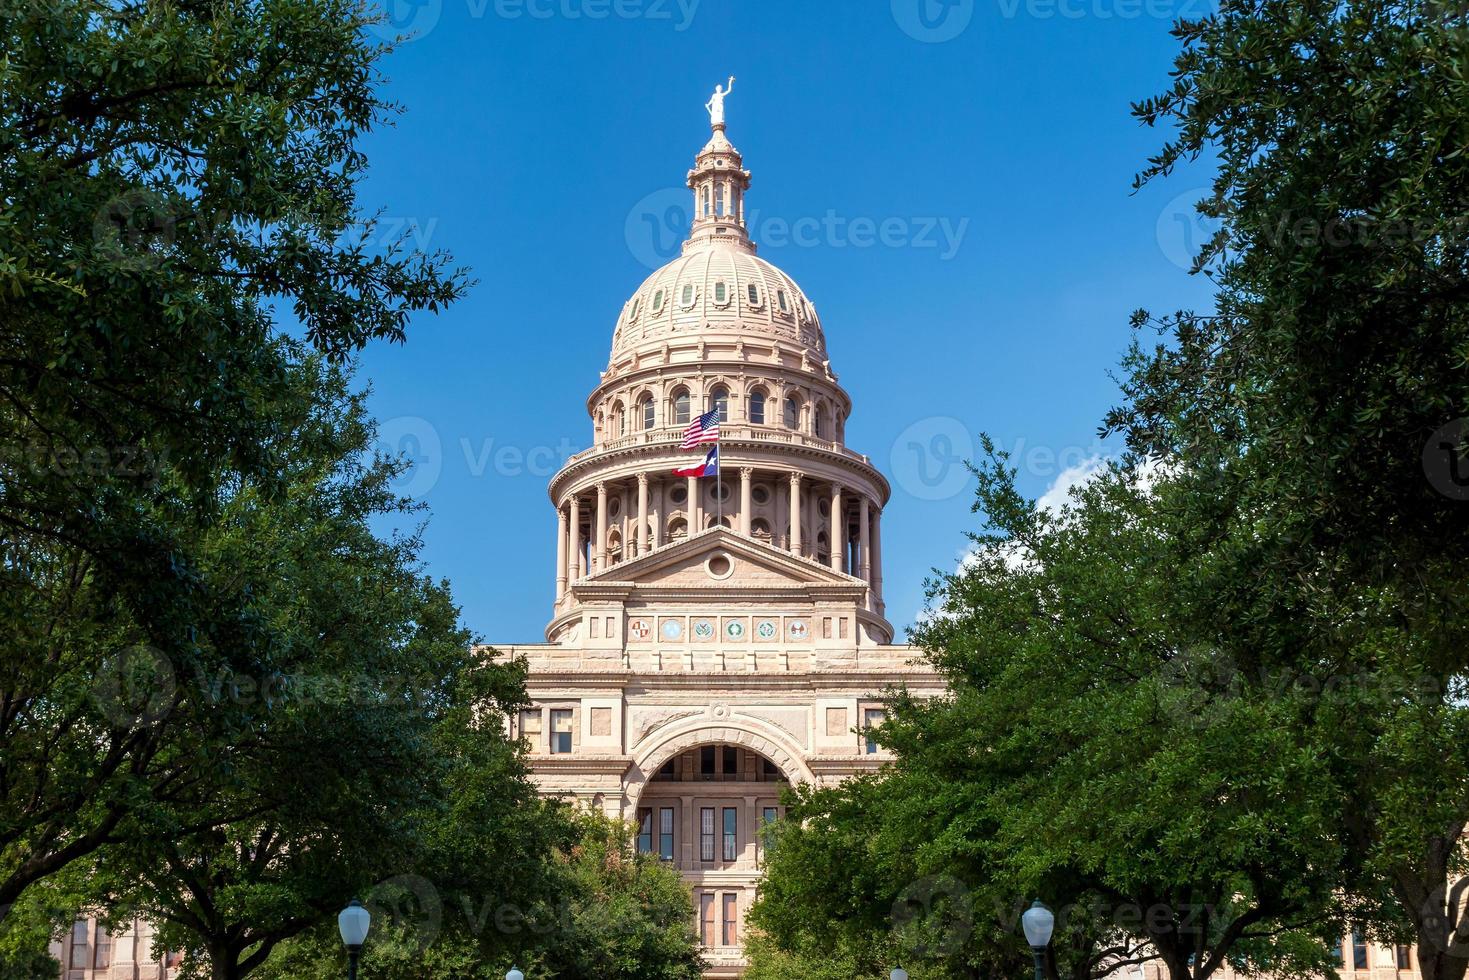 Texas State Capitol Gebäude in Austin foto